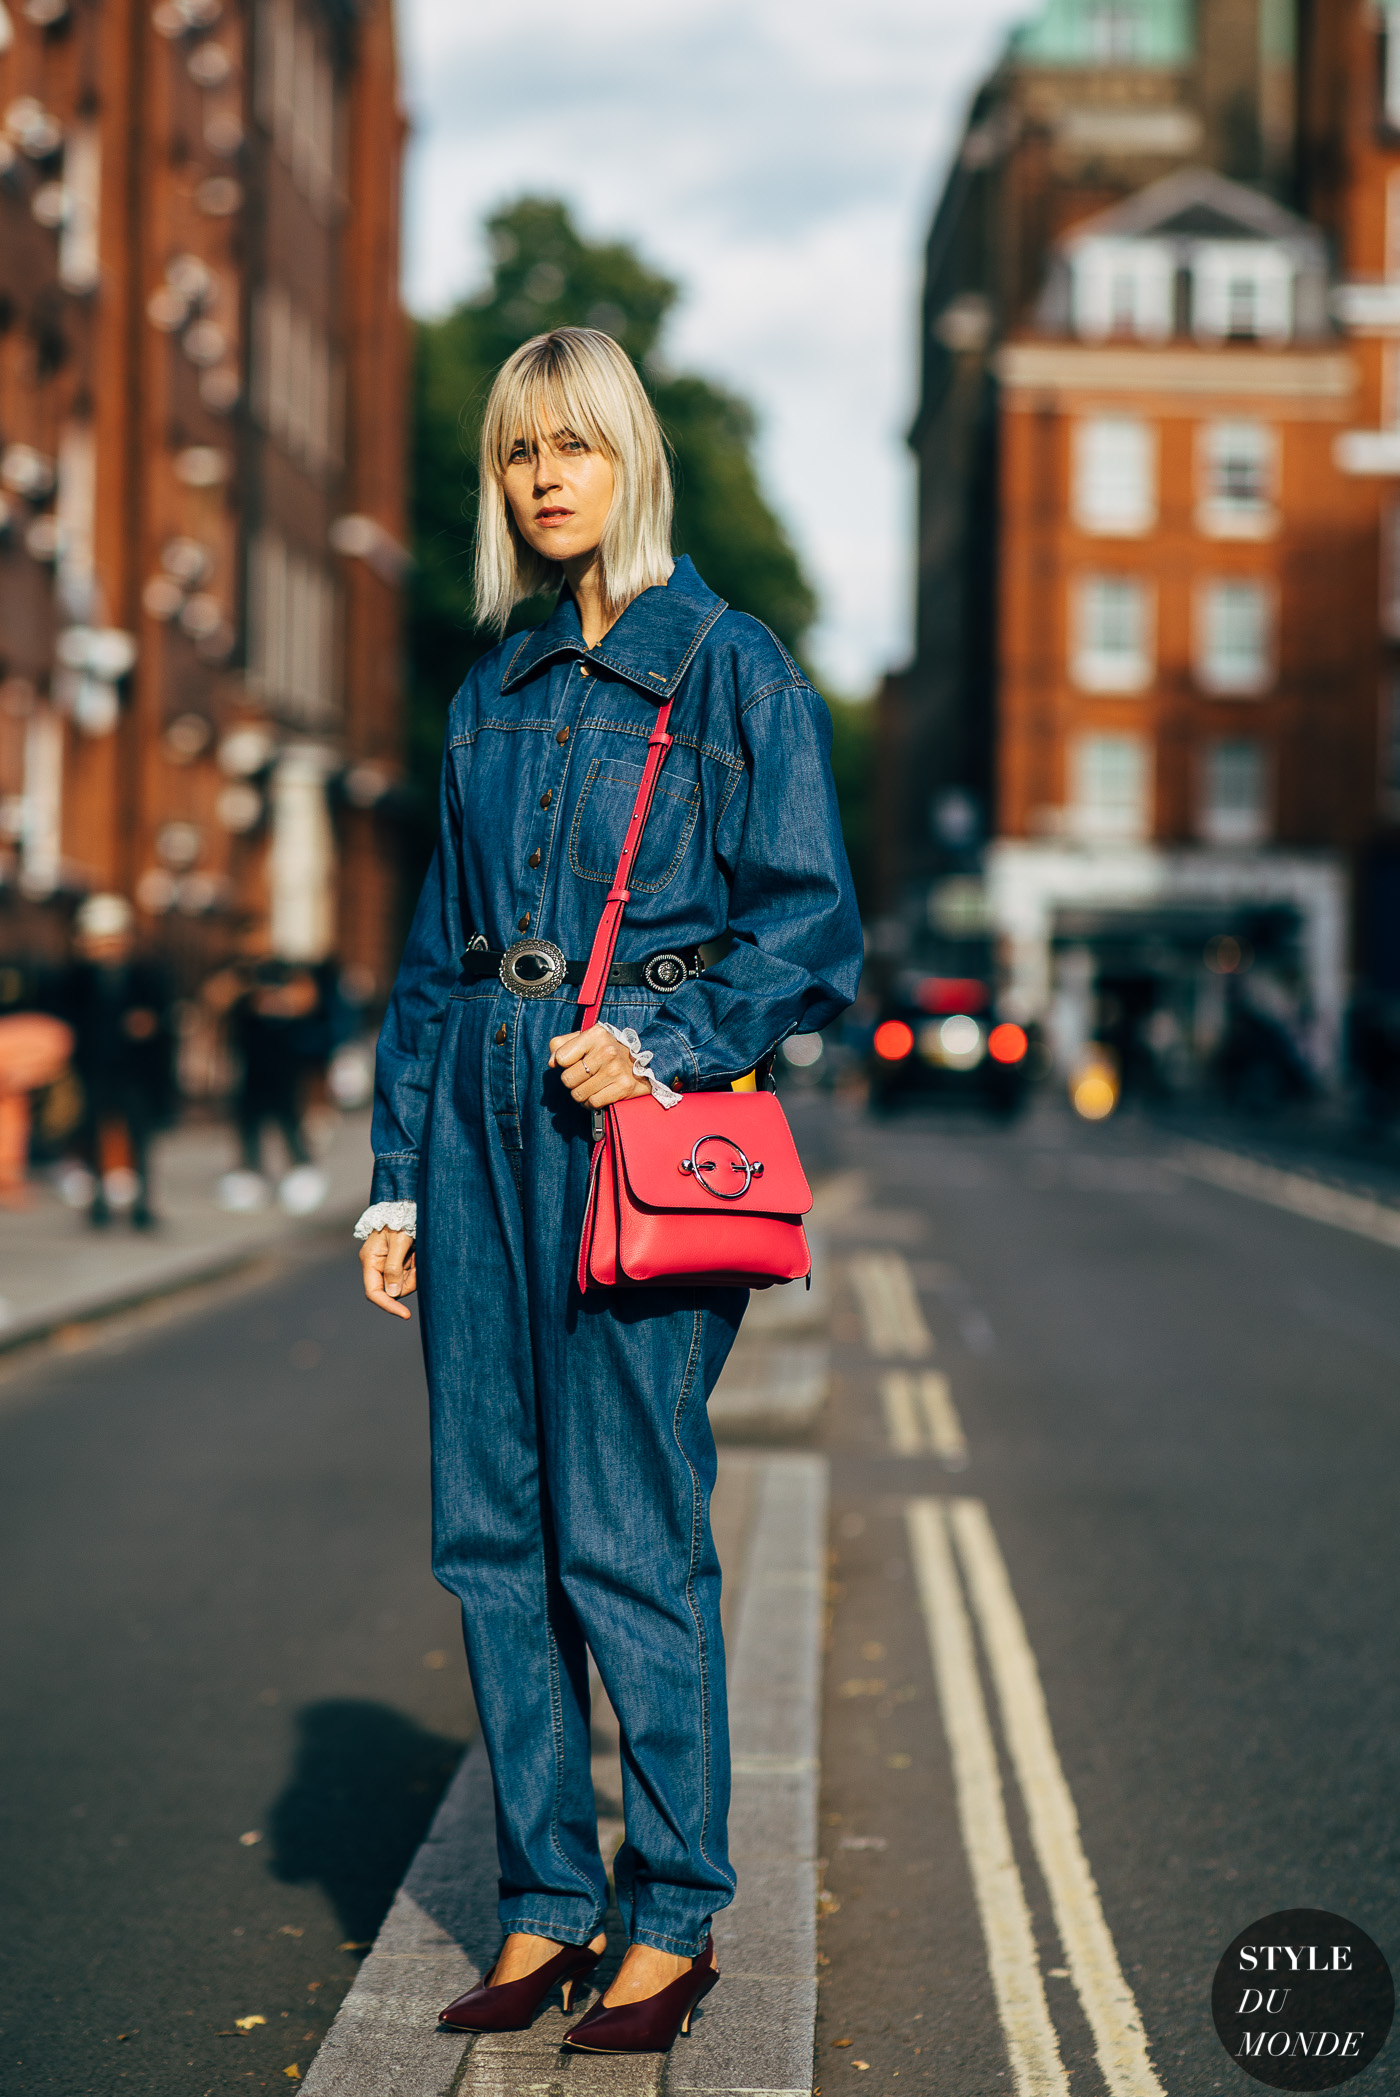 London SS 2019 Street Style: Linda Tol - STYLE DU MONDE | Street Style ...